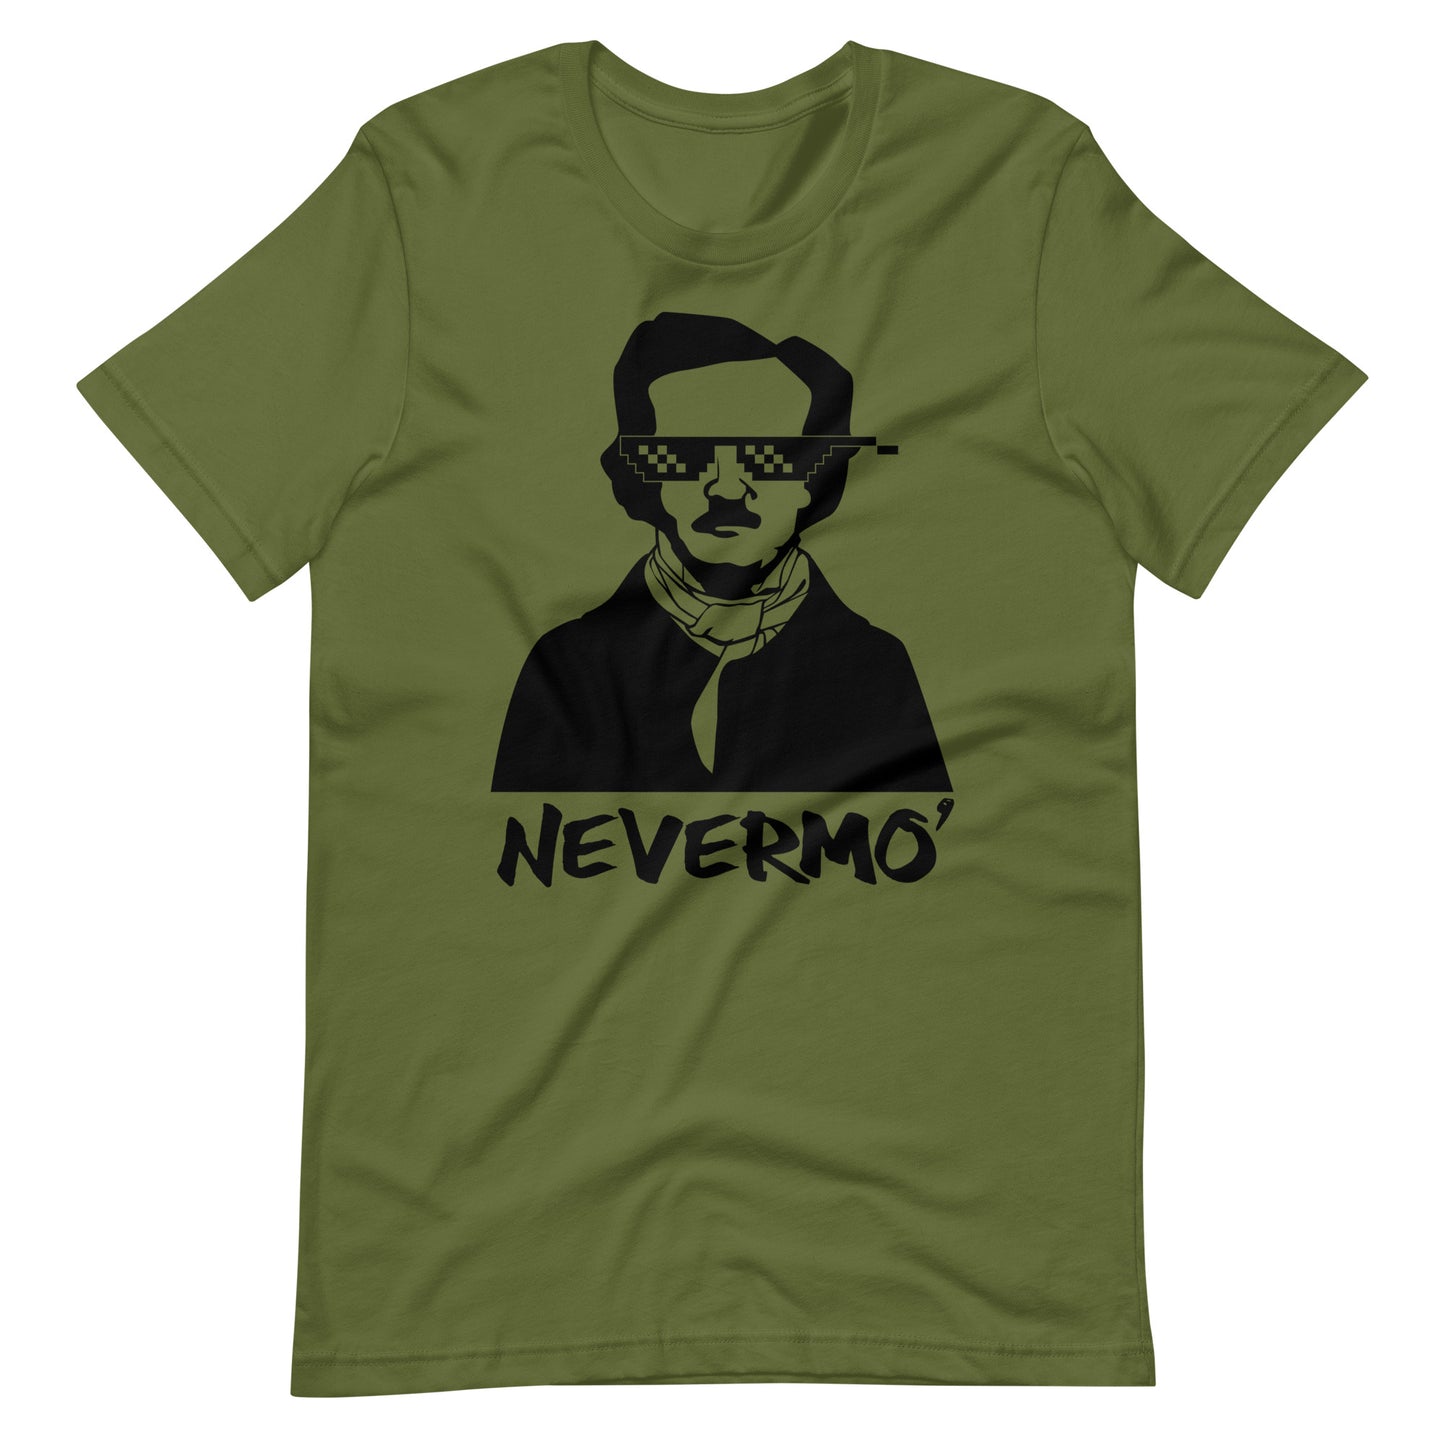 Women's Edgar Allan Poe "Nevermo" t-shirt - Olive Front